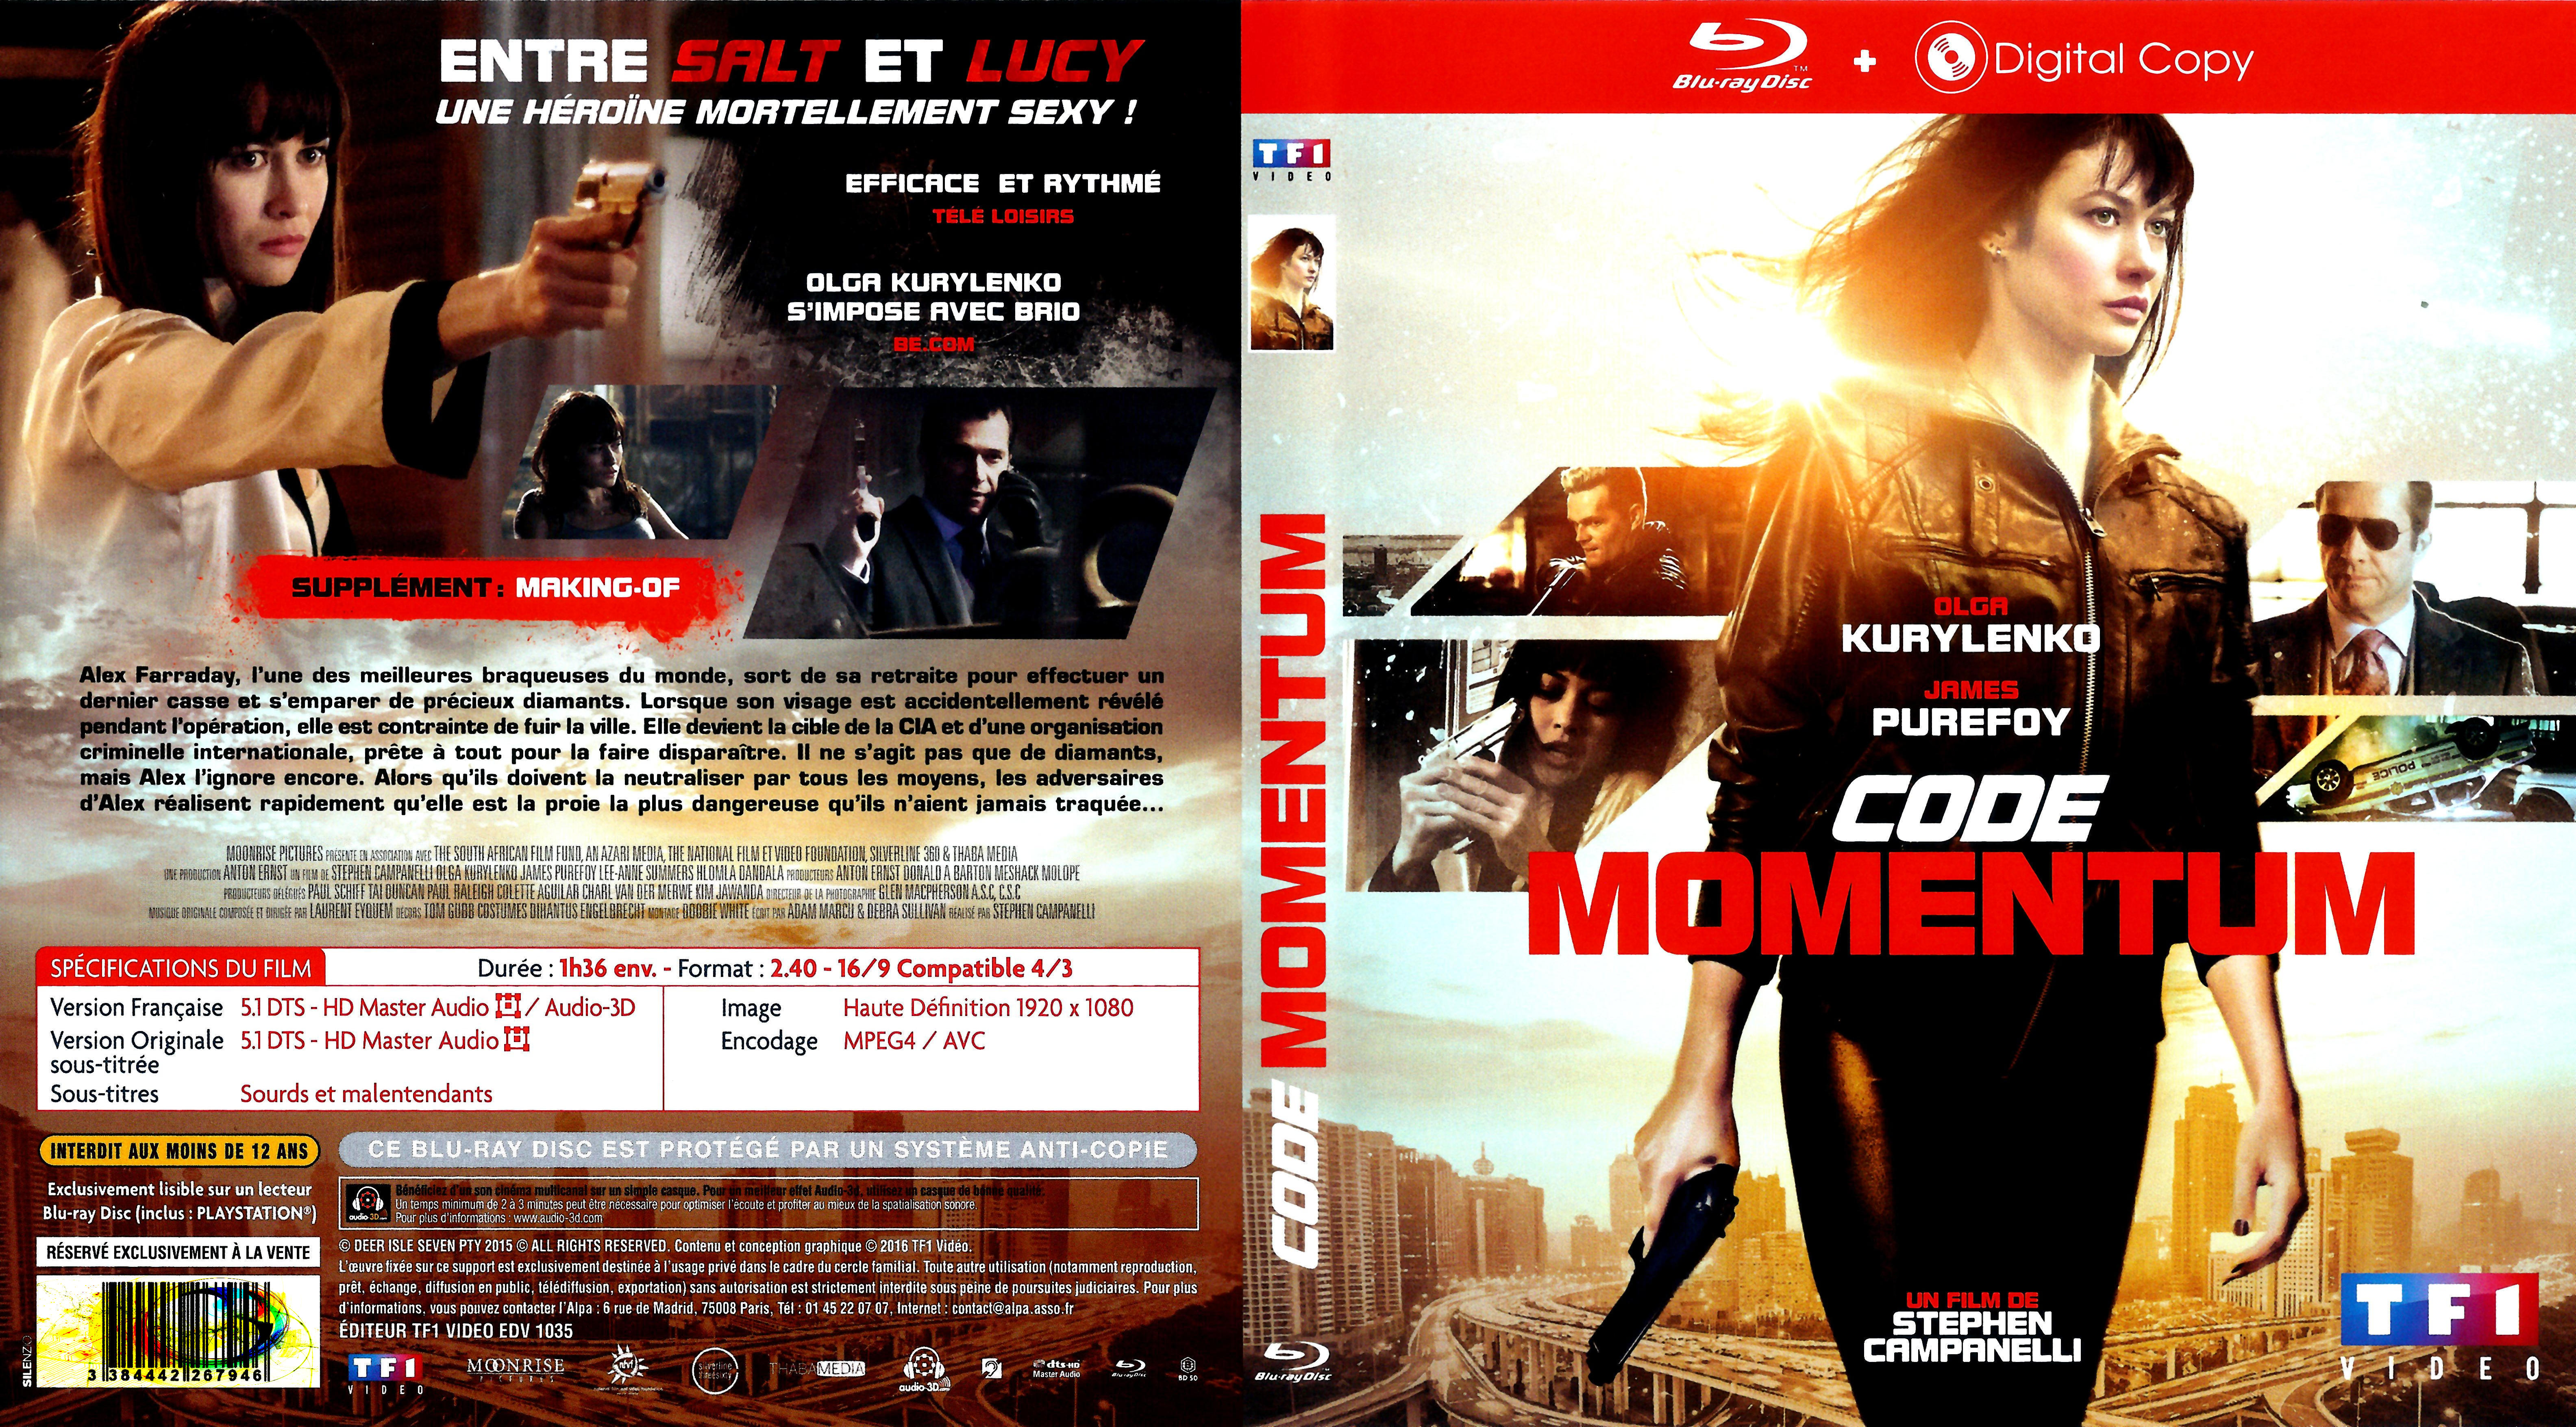 Jaquette DVD Code momentum (BLU-RAY)